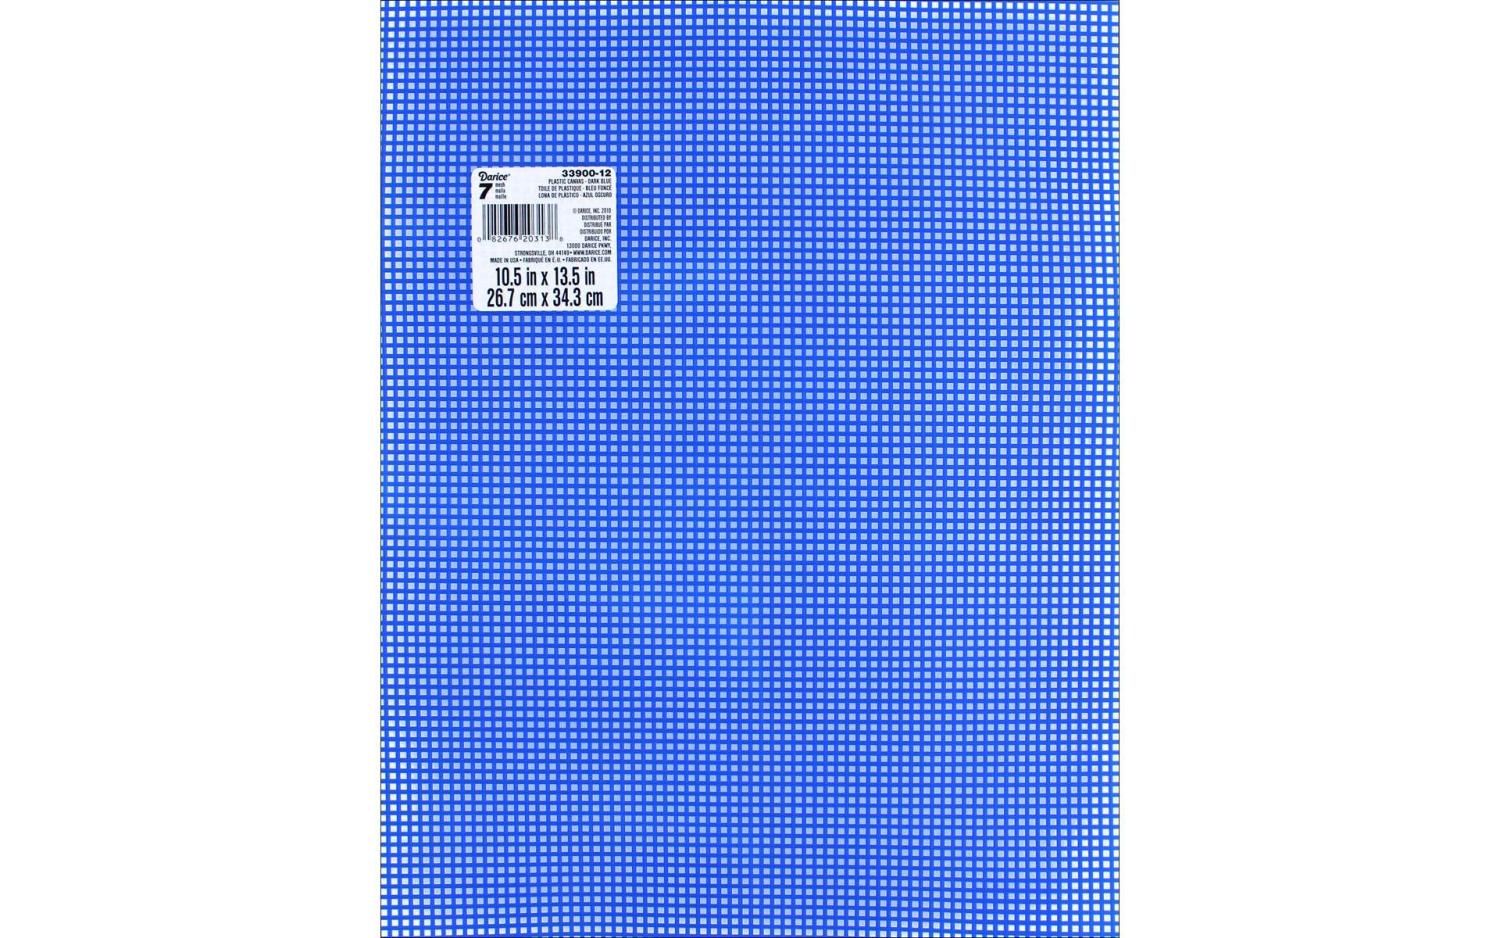 Darice Plastic Canvas #7 10.5x 13.5 Royal Blue 12 Pack